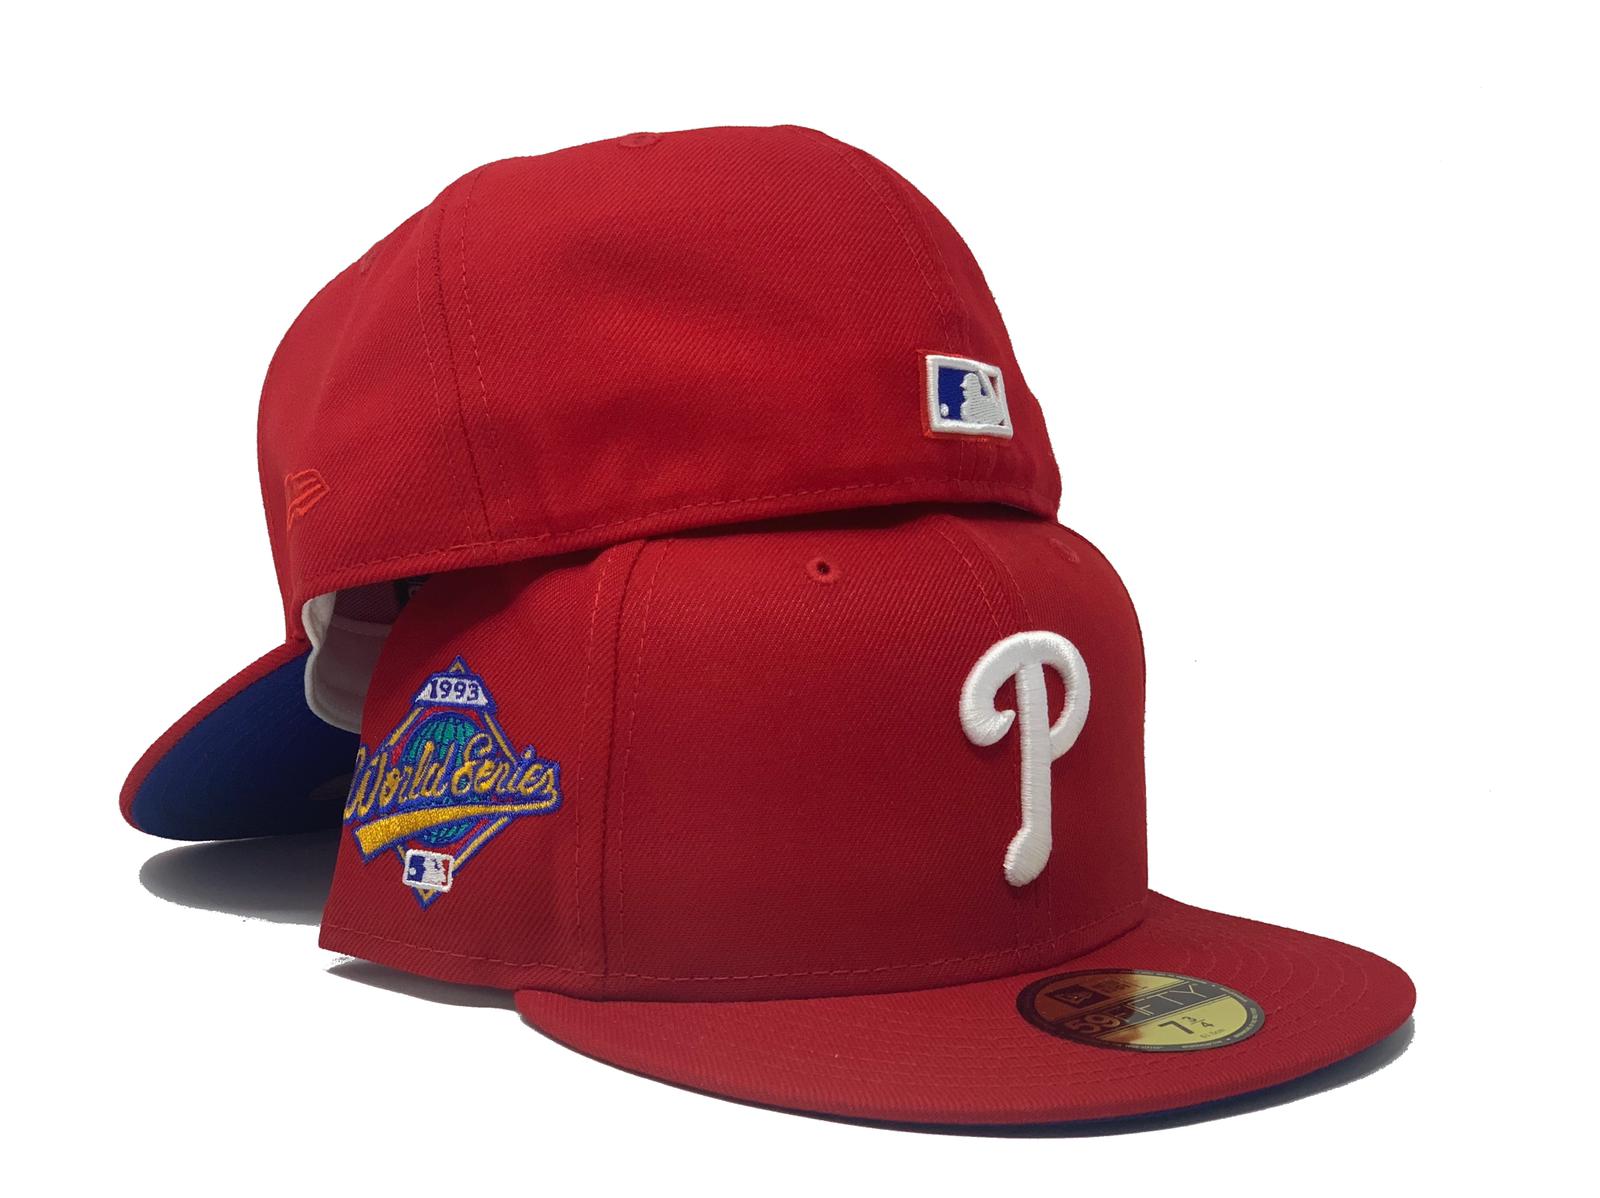 Philadelphia Phillies: Uniforms 2.0, PMell2293